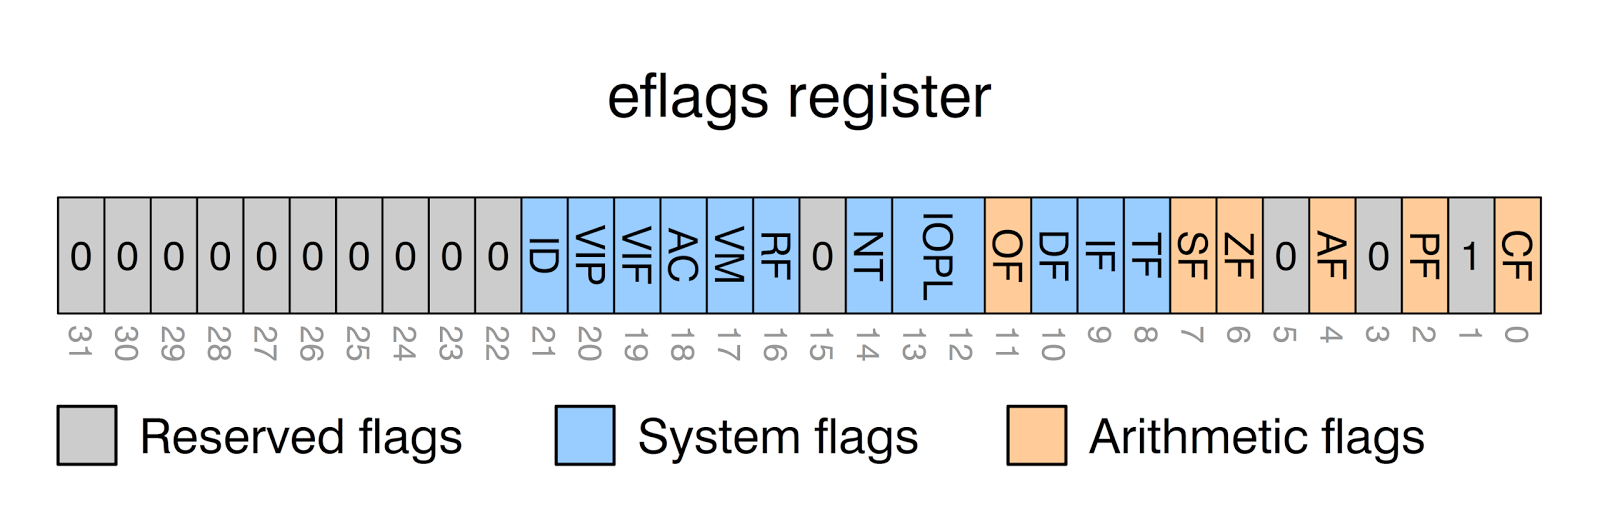 EFLAGS Registers